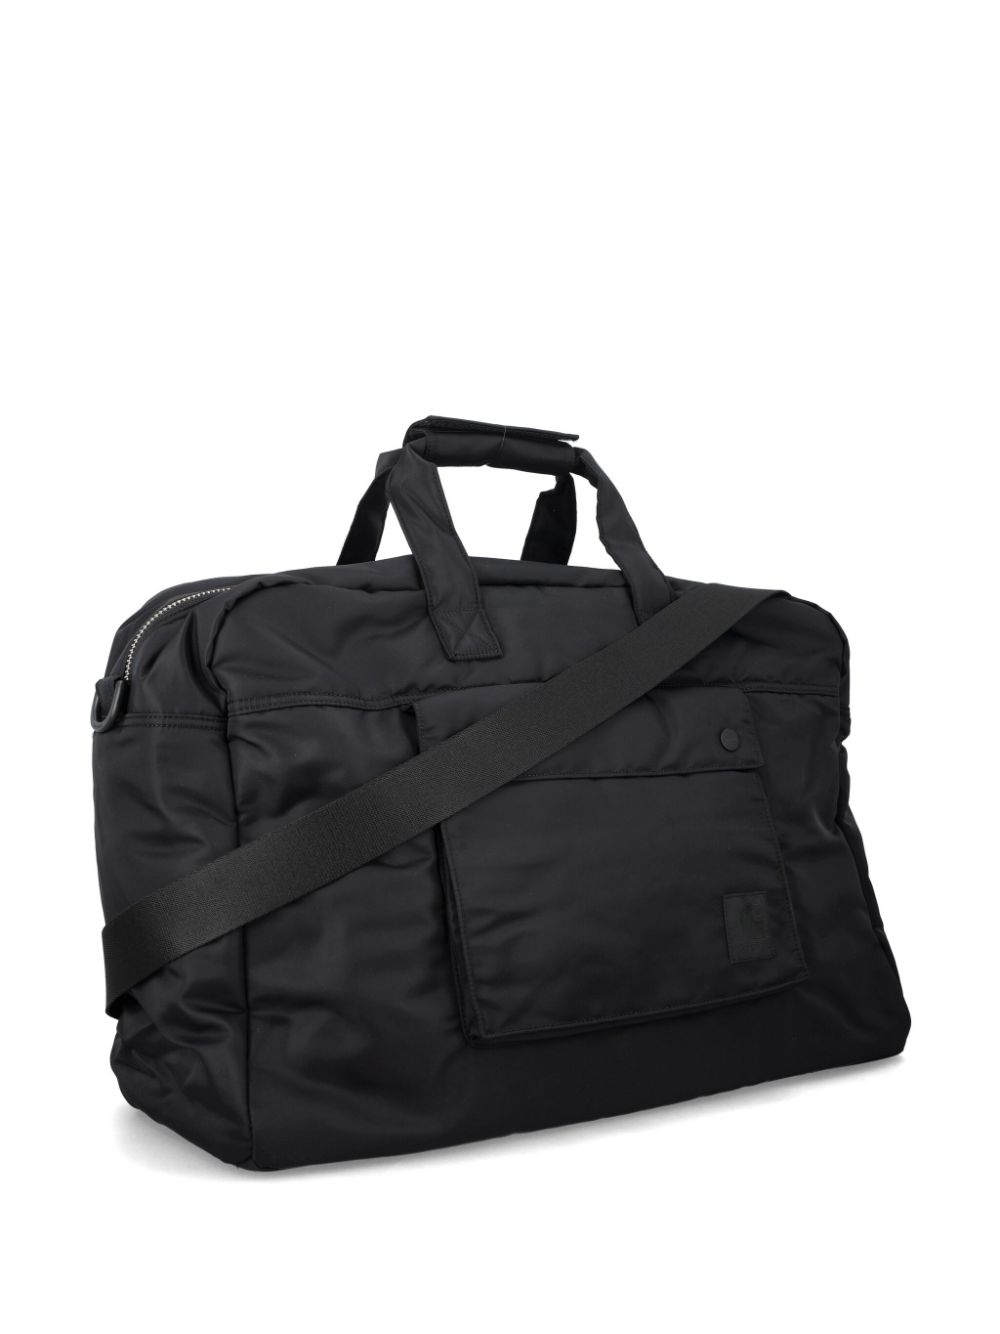 Otley two-way travel bag - 3